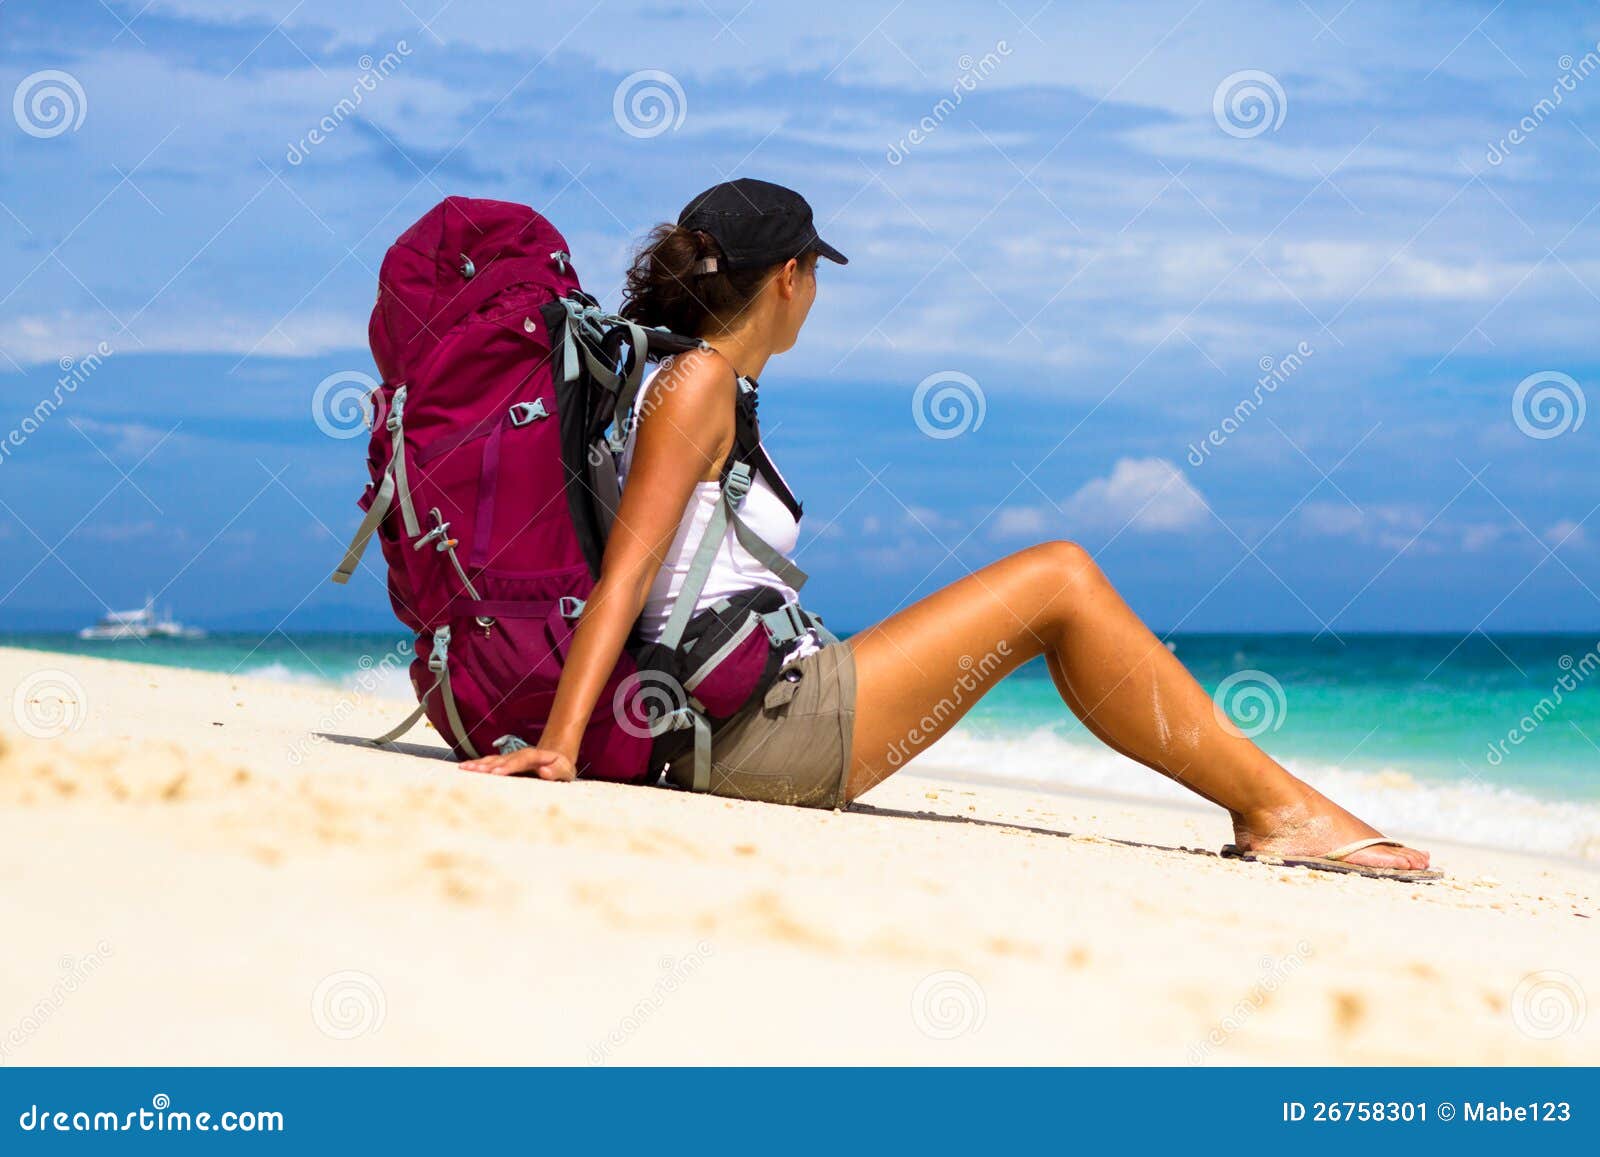 backpacker on beach